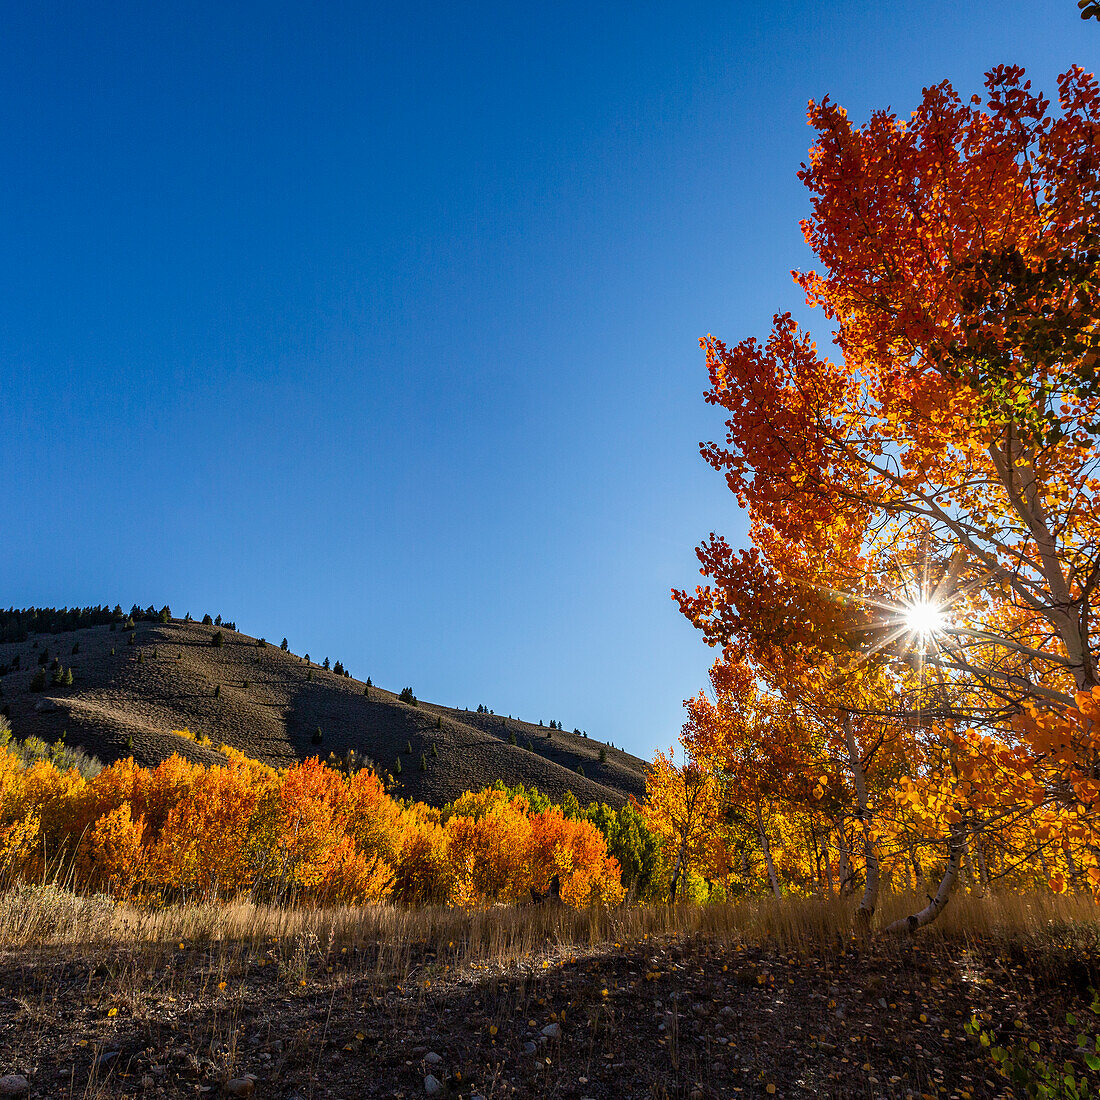 USA, Idaho, Sun Valley, Fall foliage